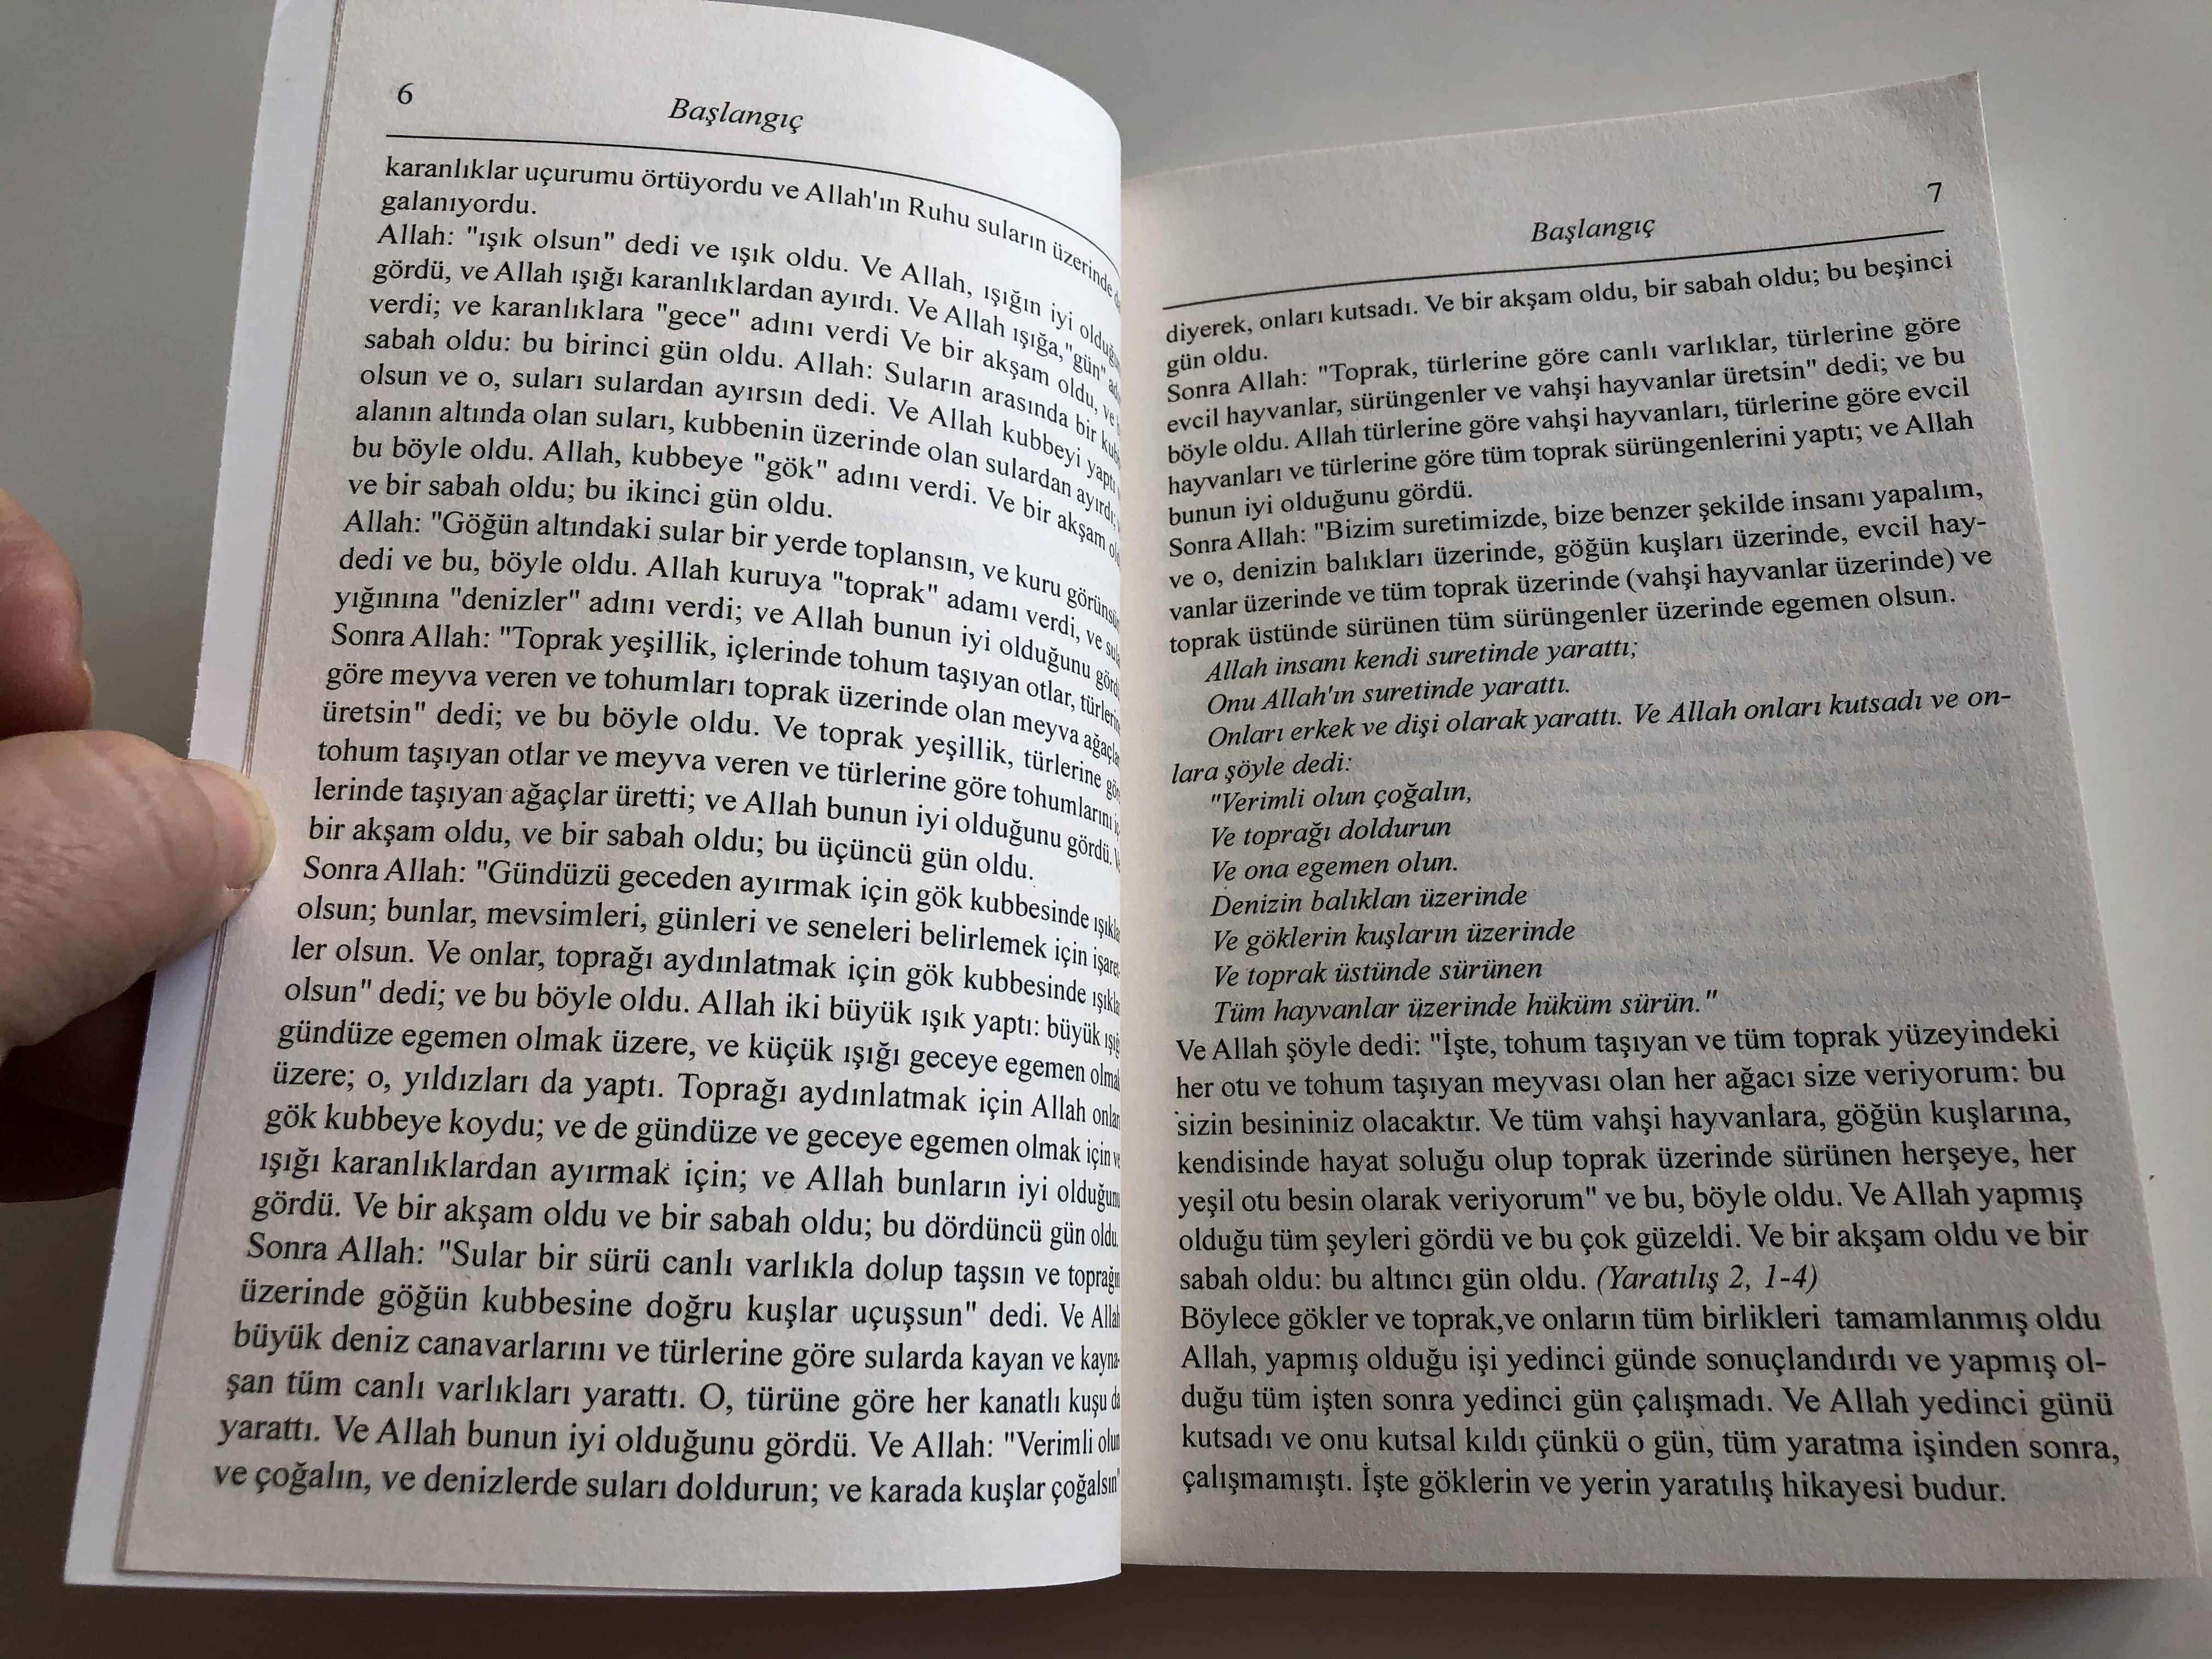 tevrat-turkish-bible-stories-translated-from-french-texts-by-dr.-jur-hakk-dem-rel-6-.jpg